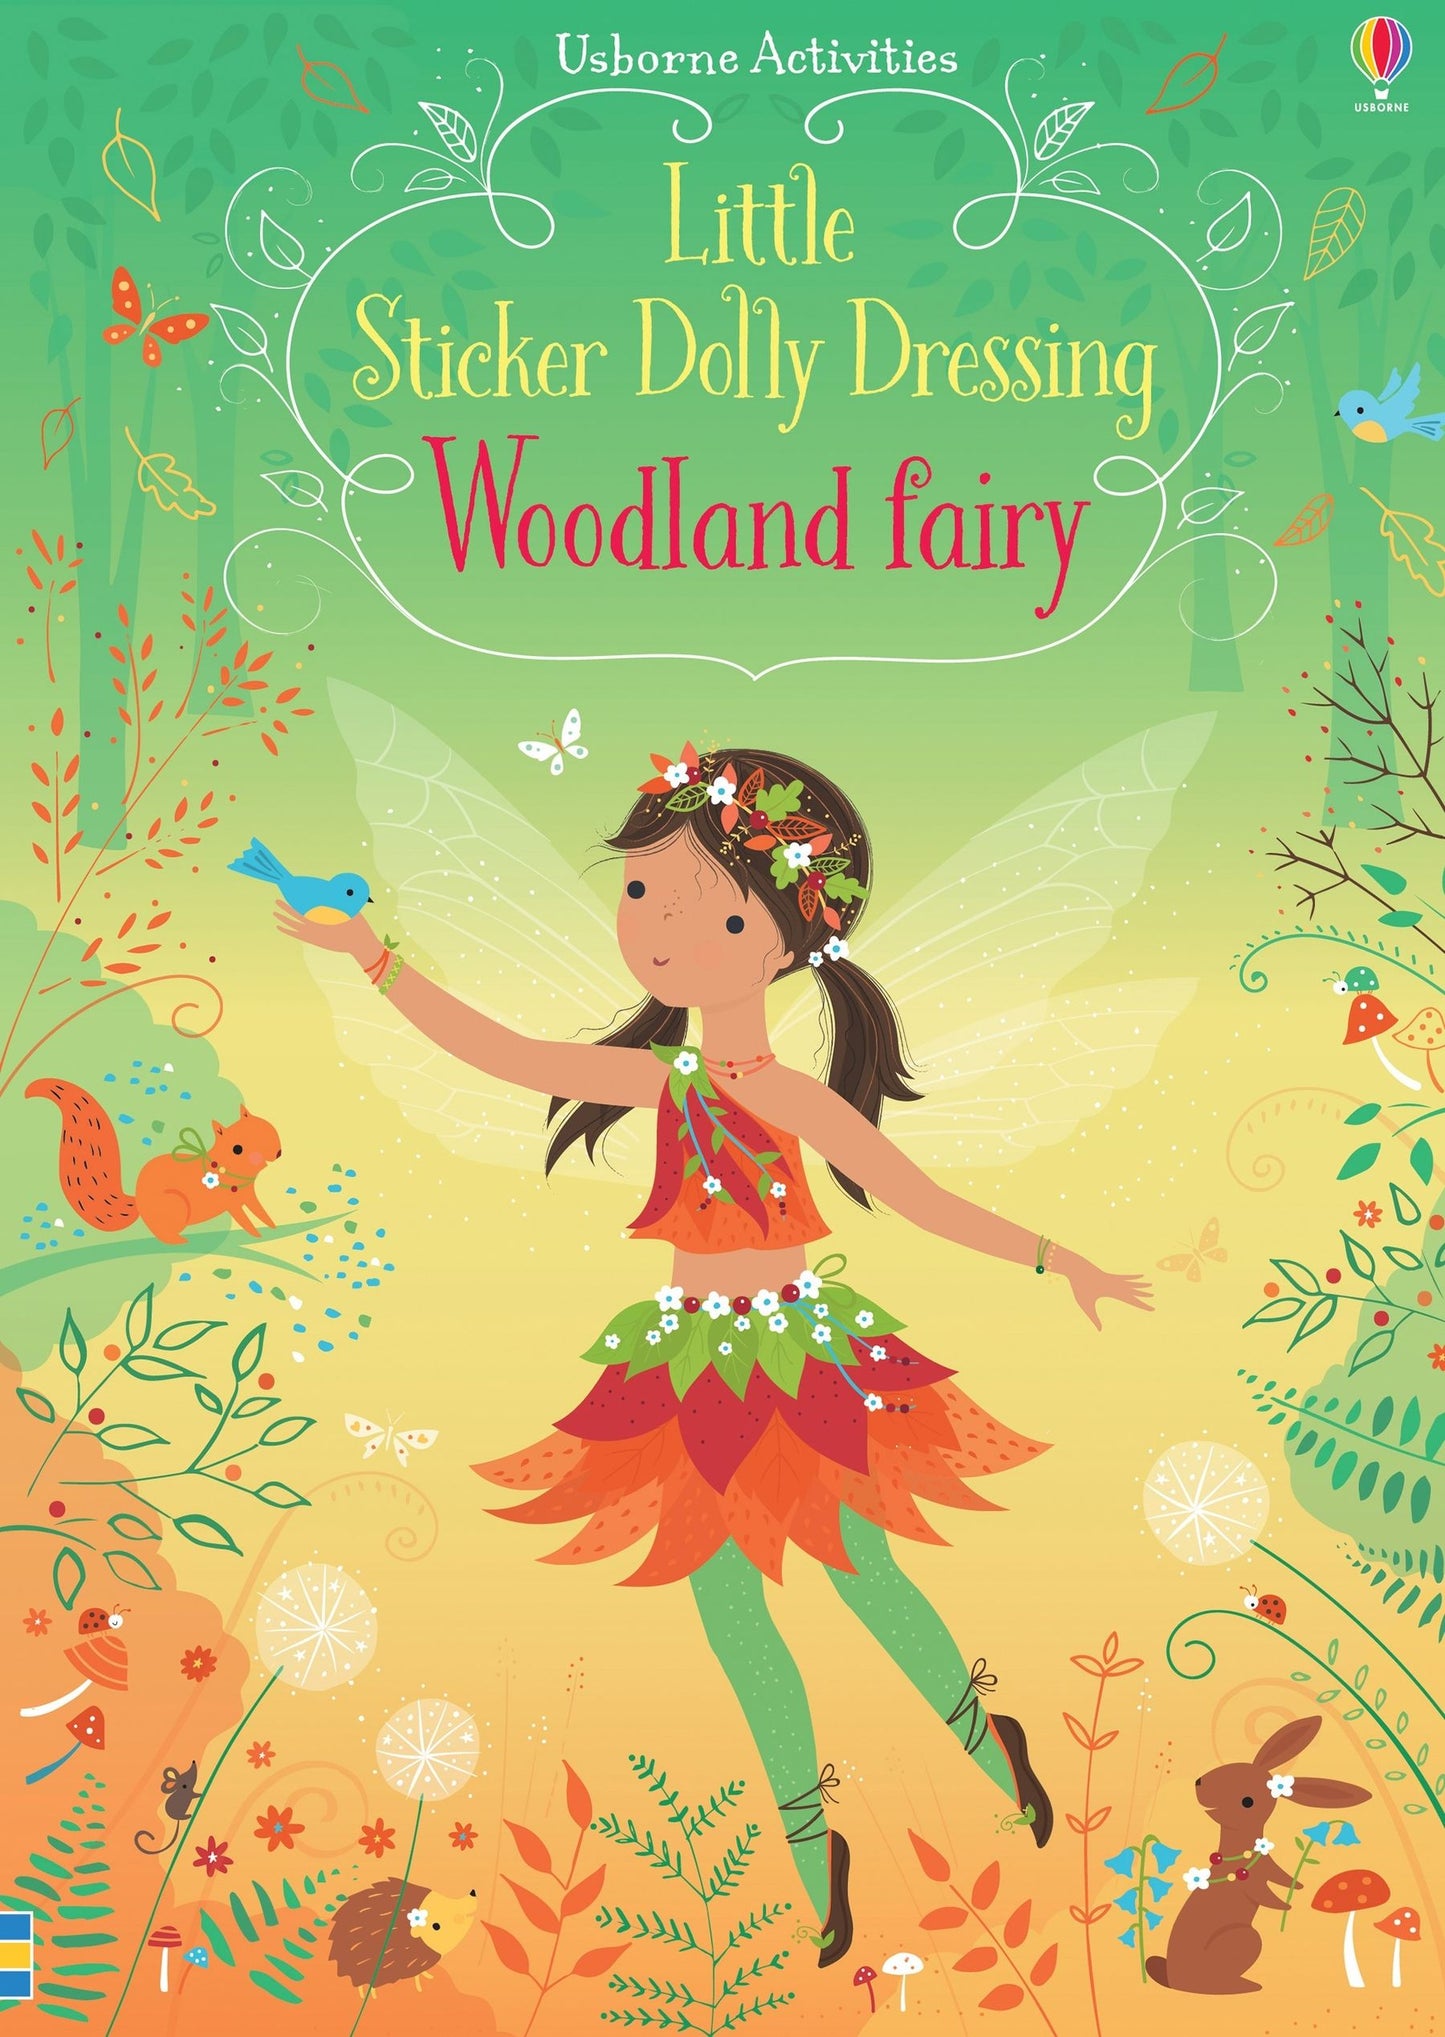 Usborne Books - Woodland Fairy Little Sticker Dolly Dressing